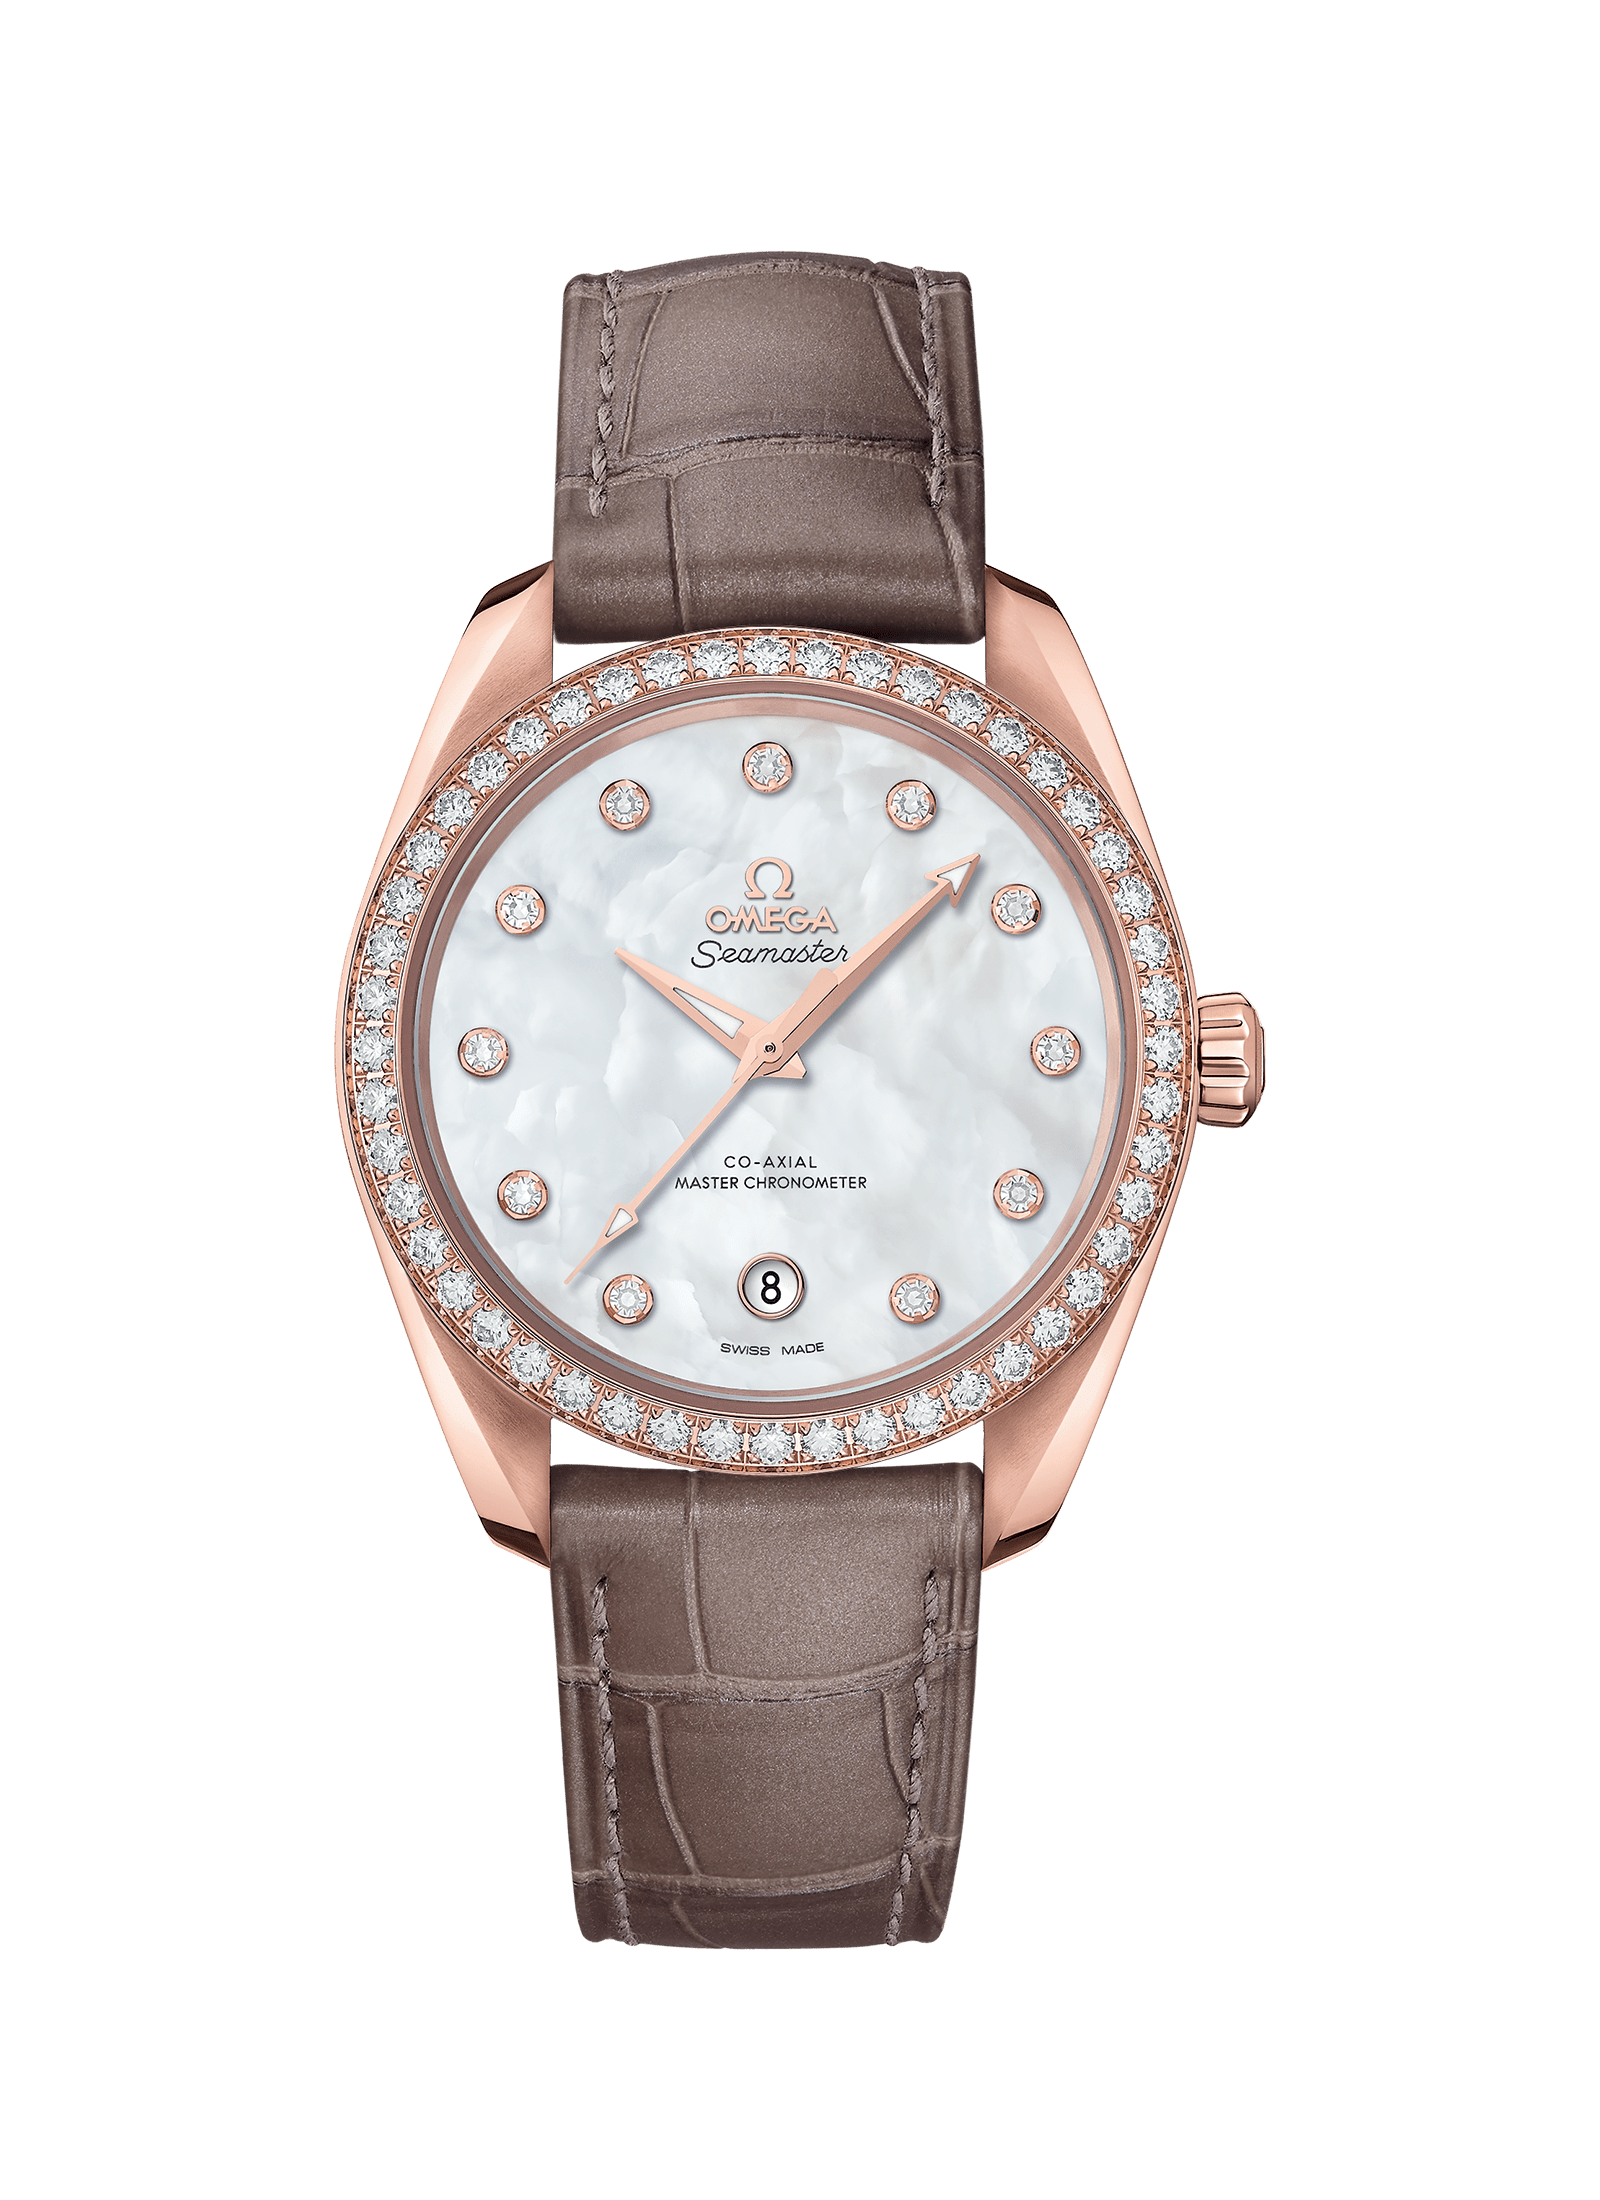 Aqua Terra 150M Co‑Axial Master Chronometer pour femme 38 mm